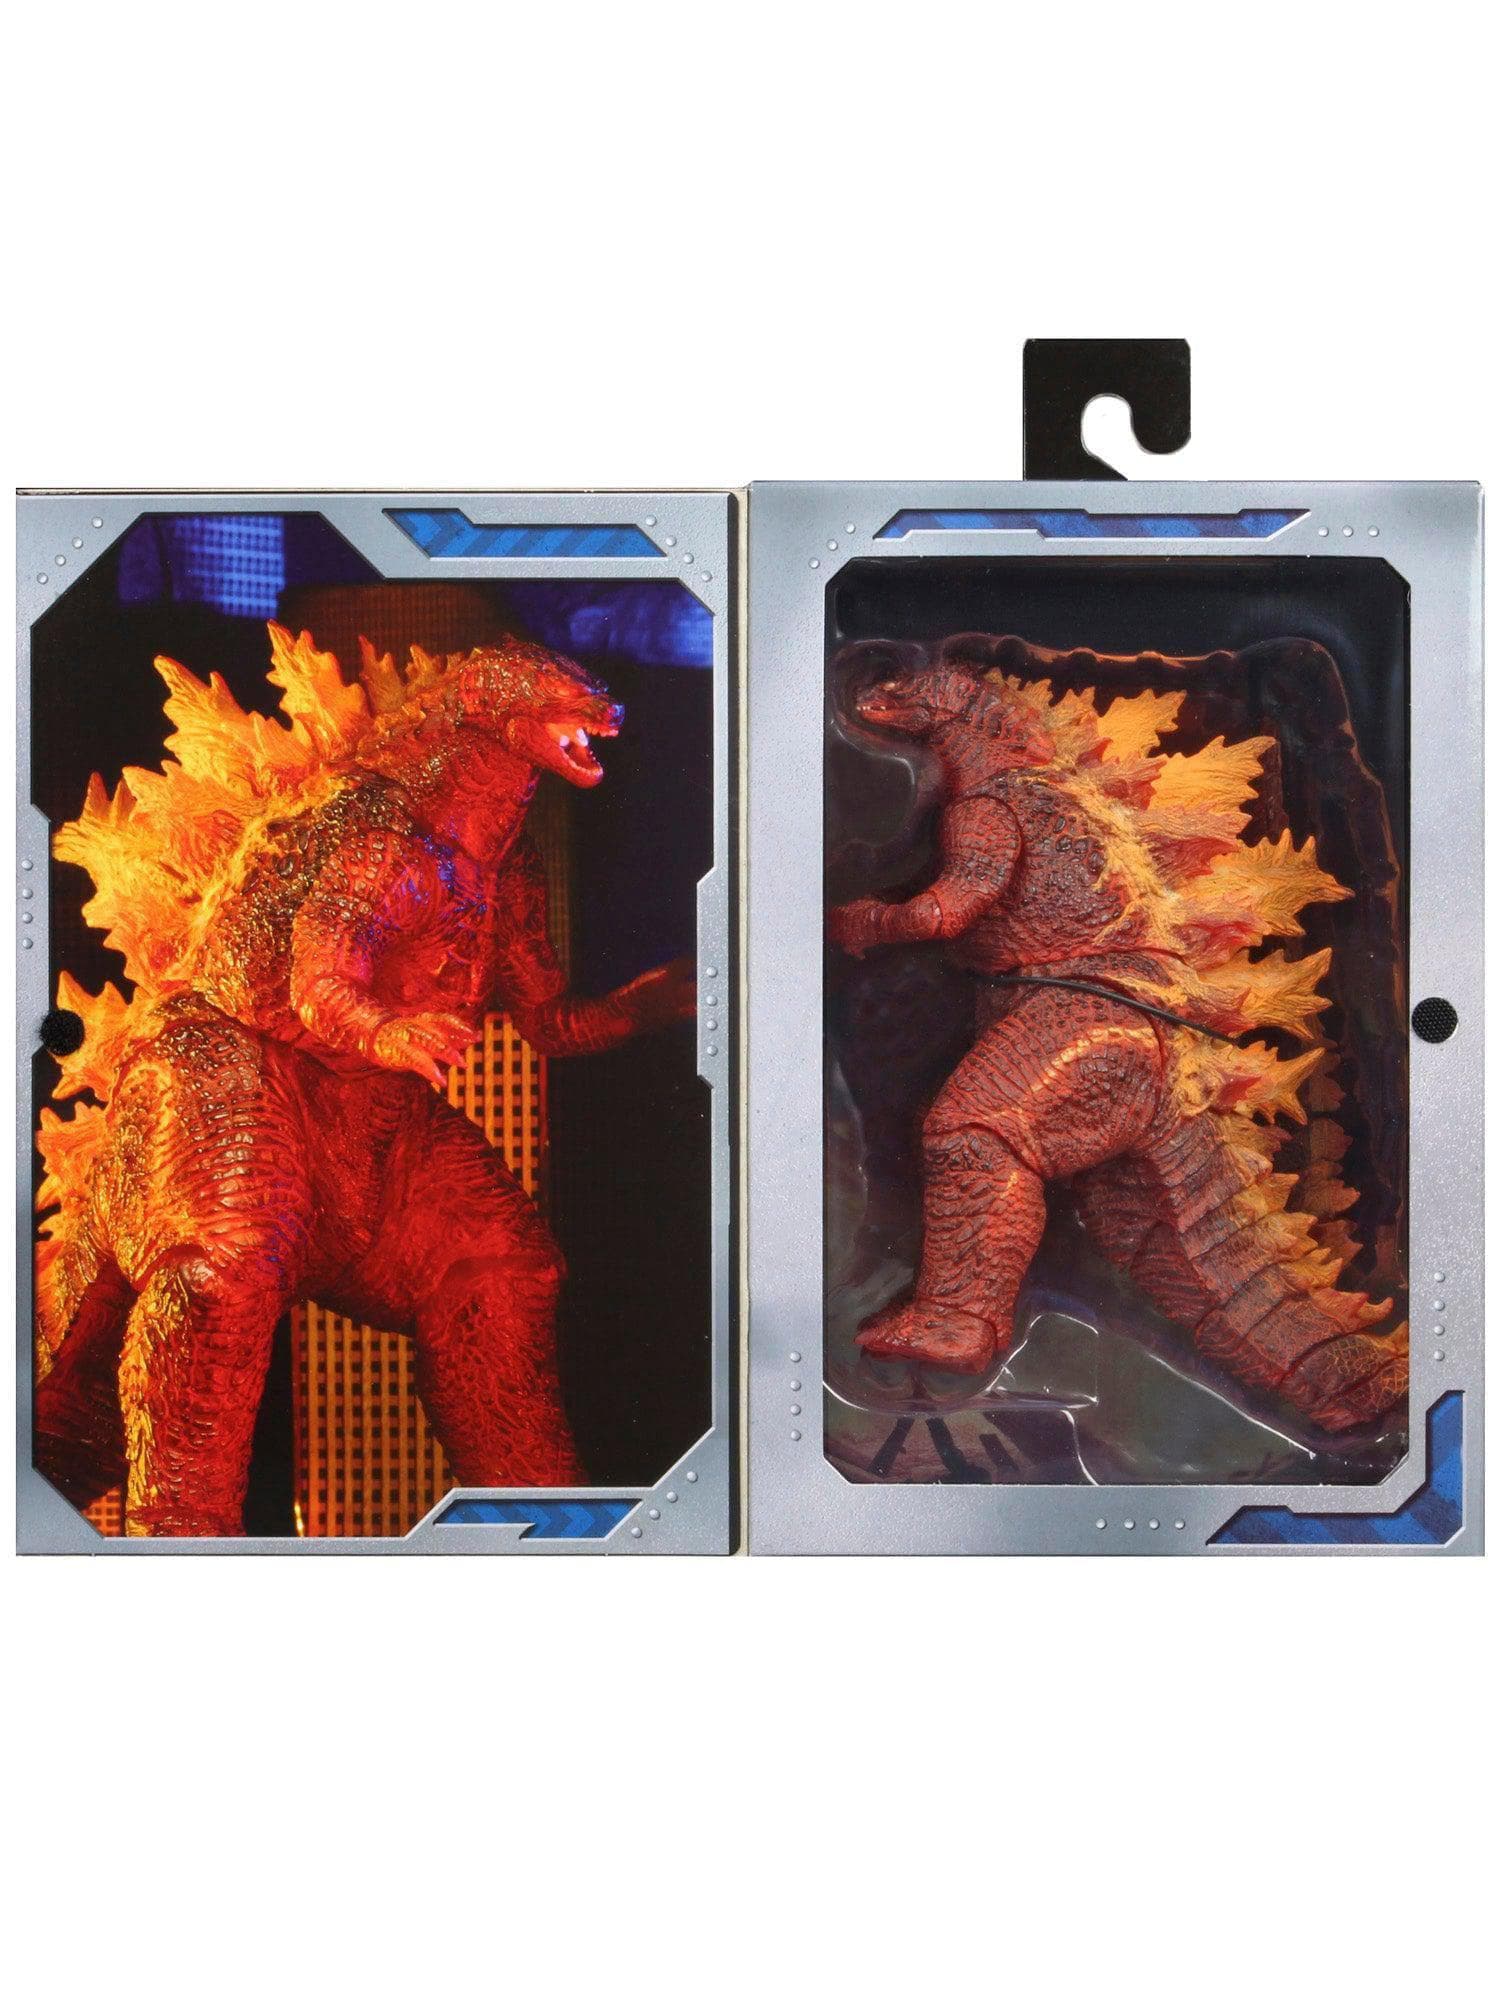 NECA - Godzilla King of the Monsters - 12" Head-to-Tail Action Figure - 2019 Godzilla V3 - costumes.com